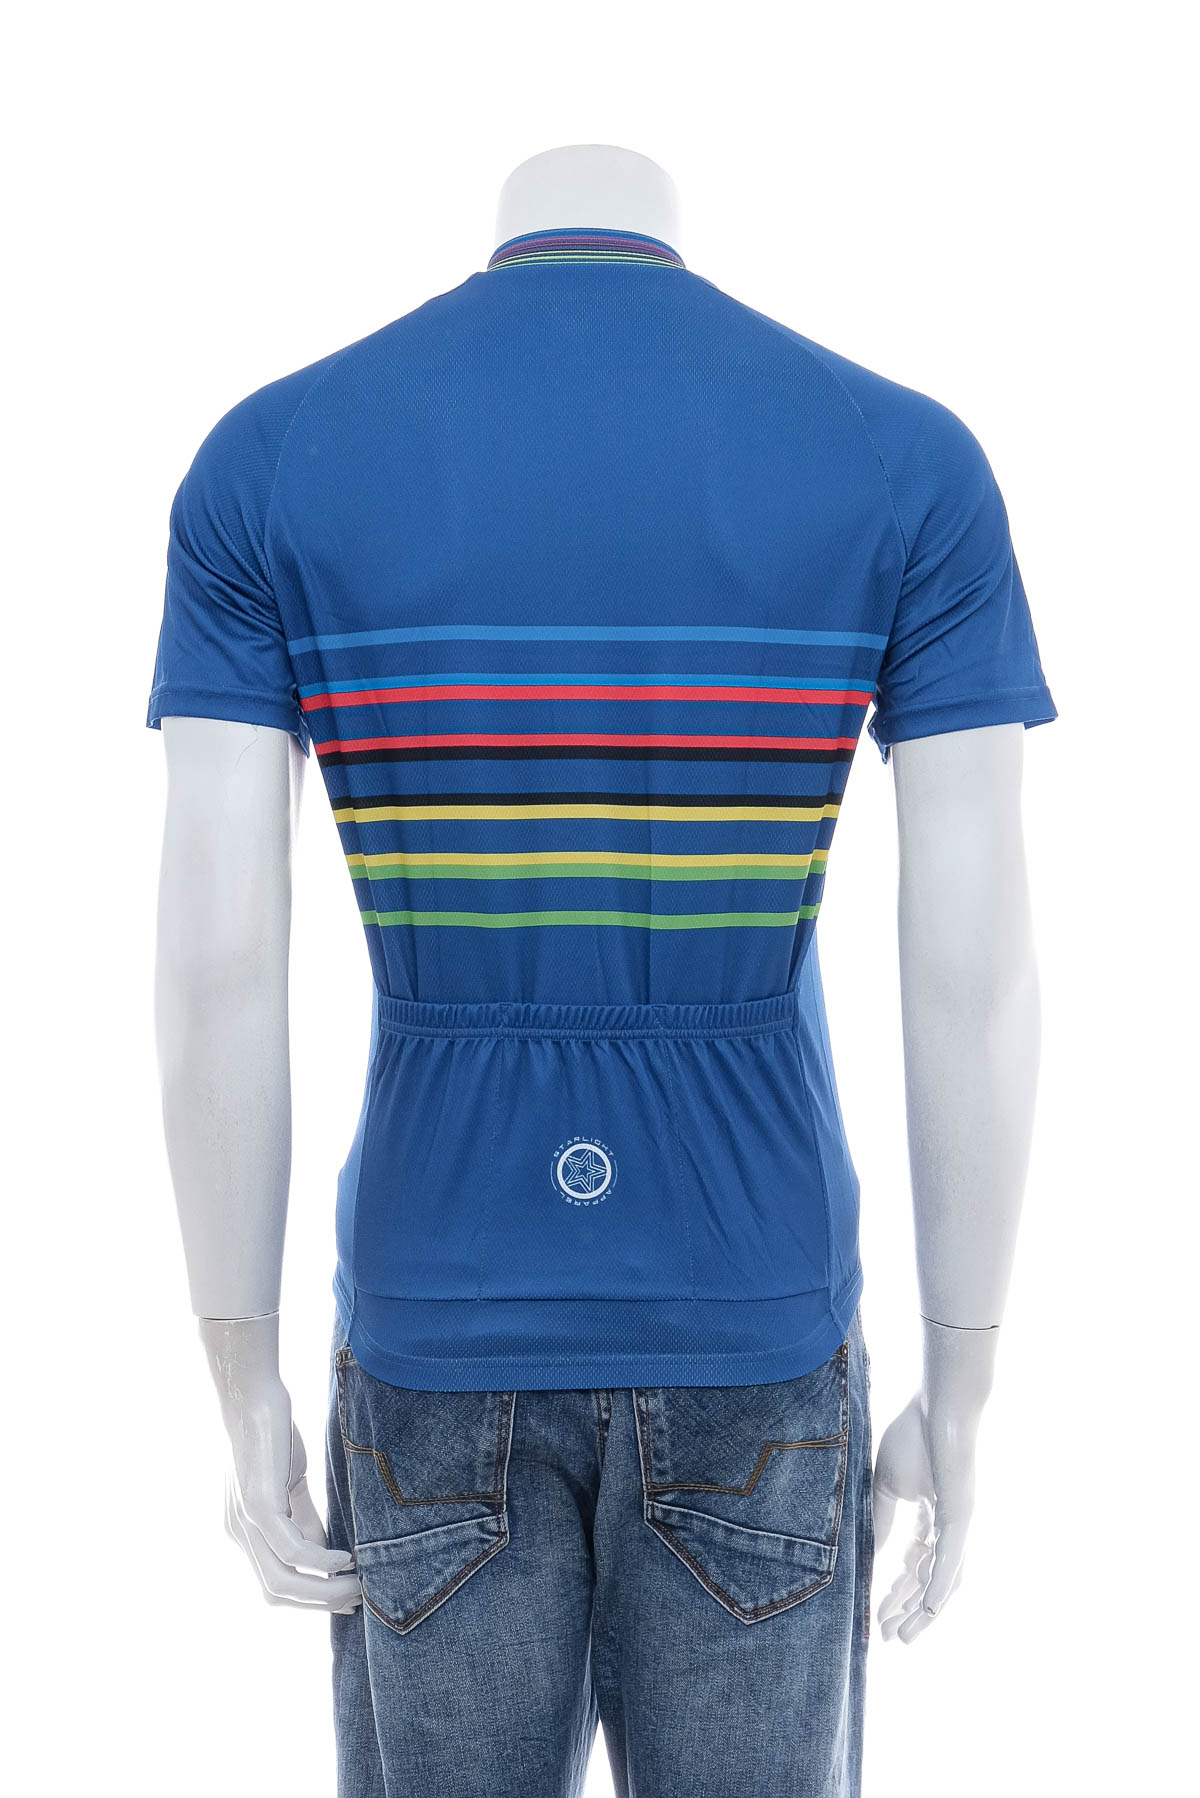 Men's T-shirt for cycling - STARLIGHT - 1